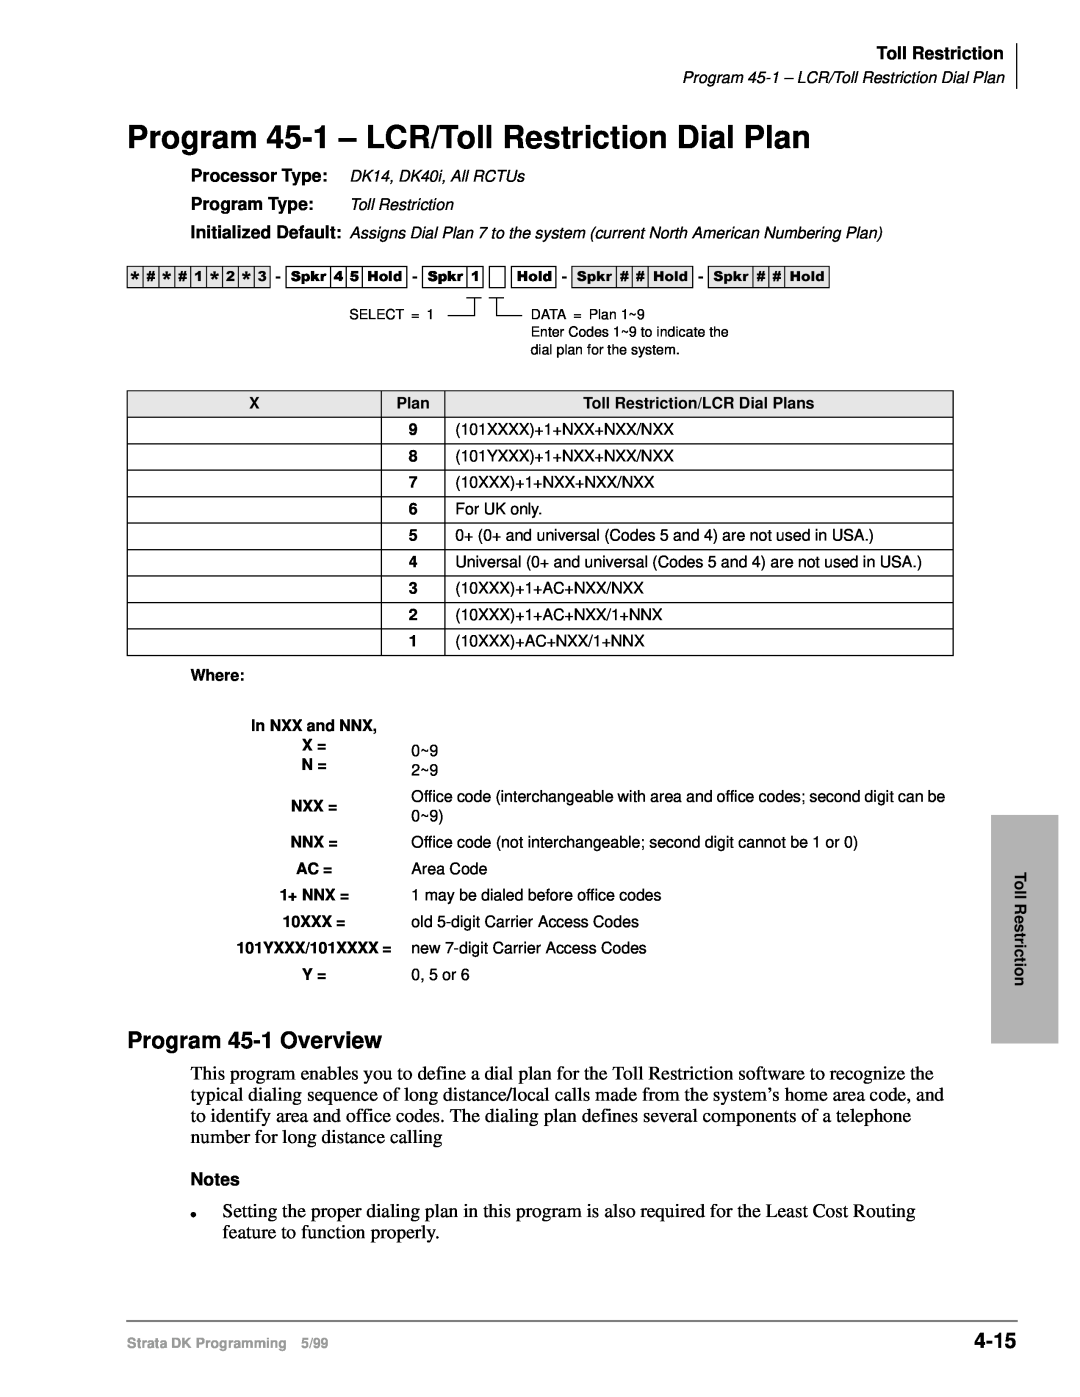 Toshiba dk14 manual Program 45-1– LCR/Toll Restriction Dial Plan, Program 45-1Overview, 4-15 